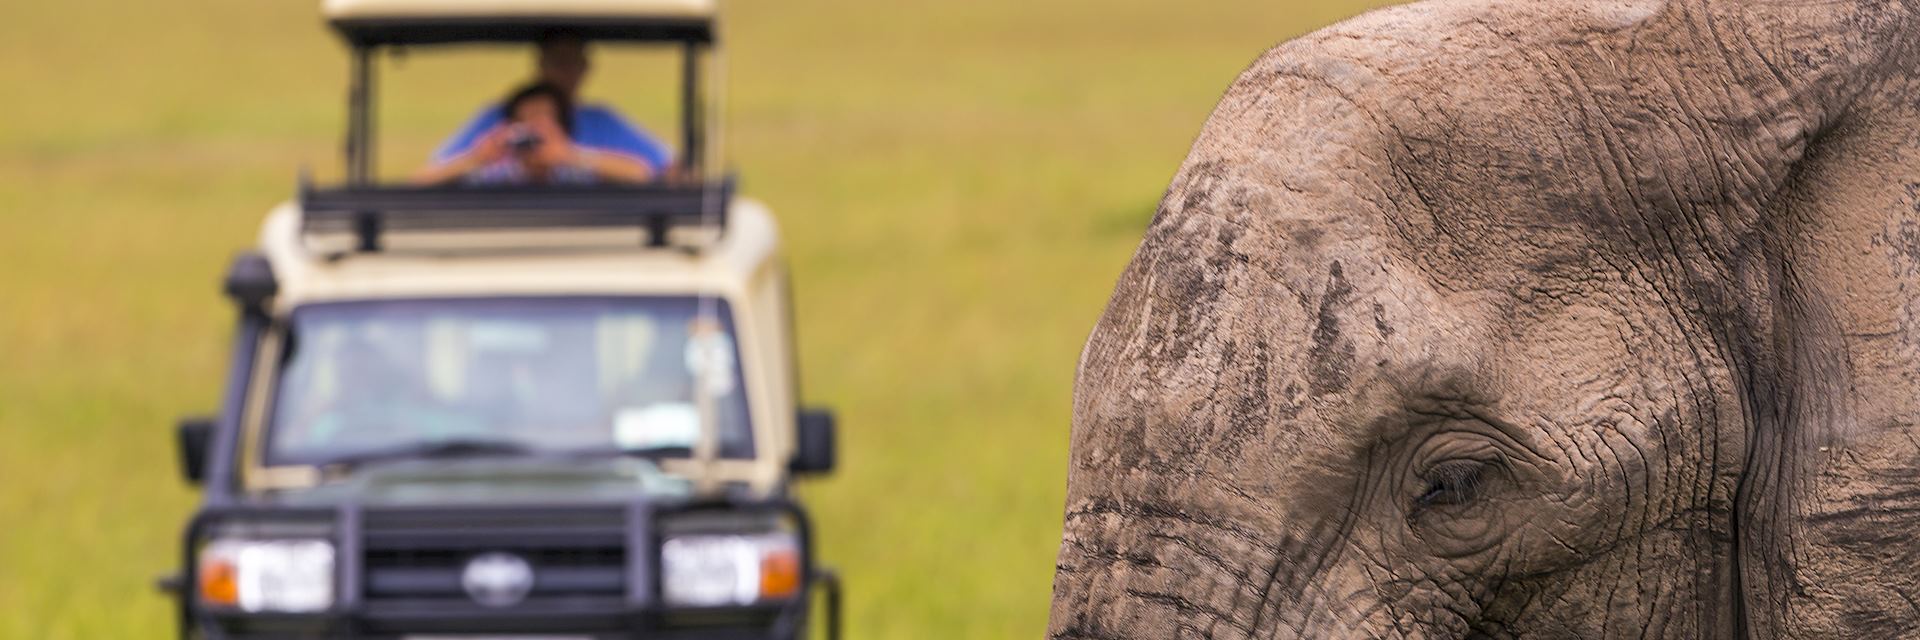 Getting close the elephant, Kenya